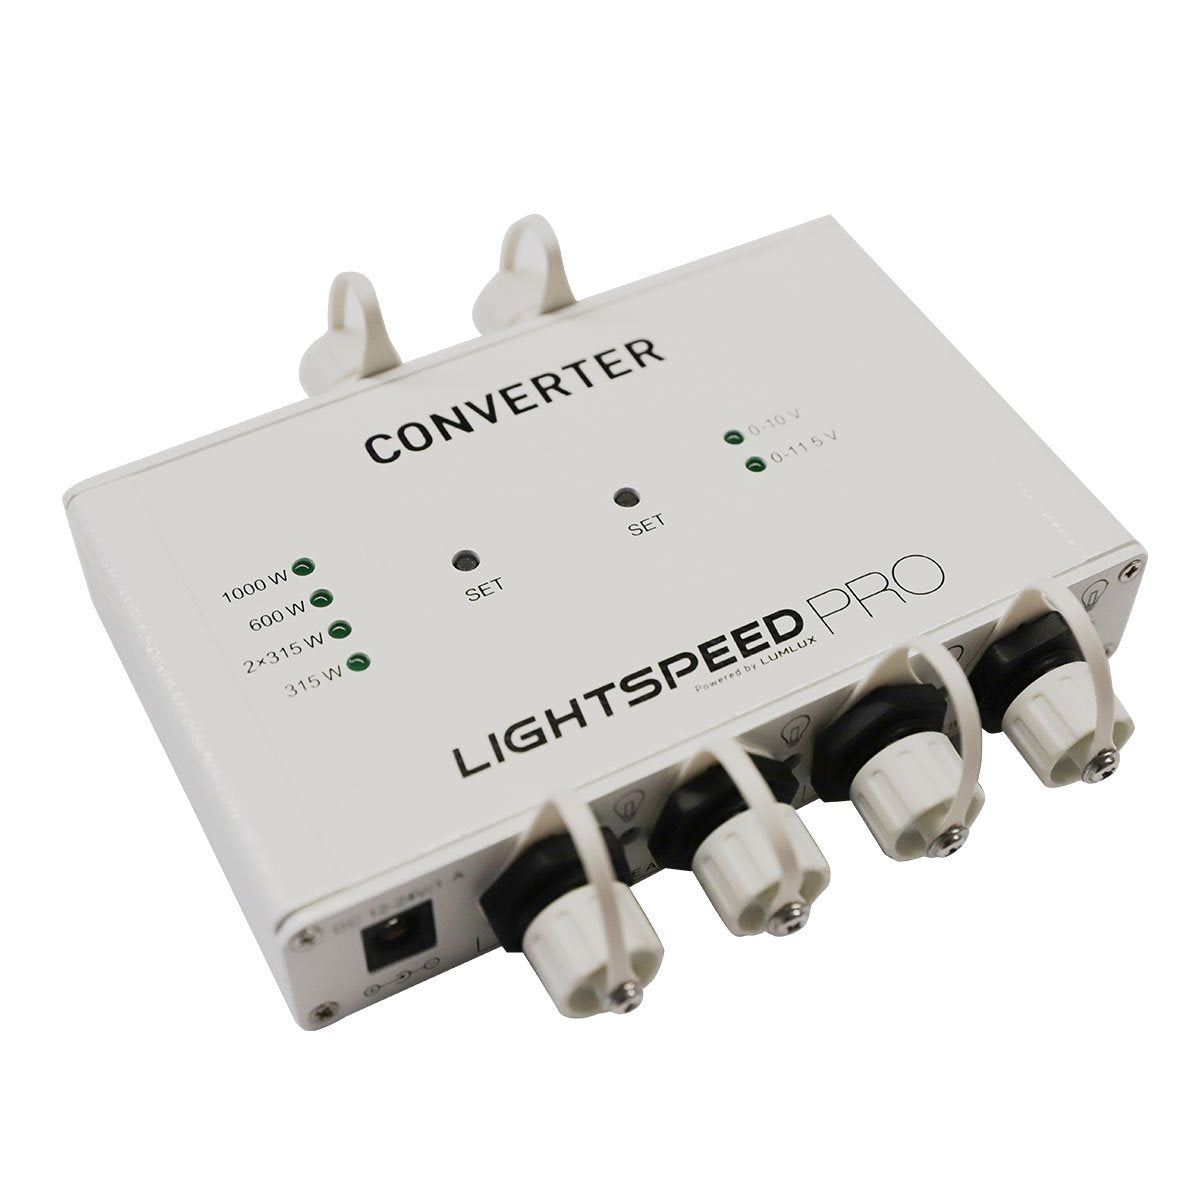 Product Image:Lightspeed Pro Signal Convertor